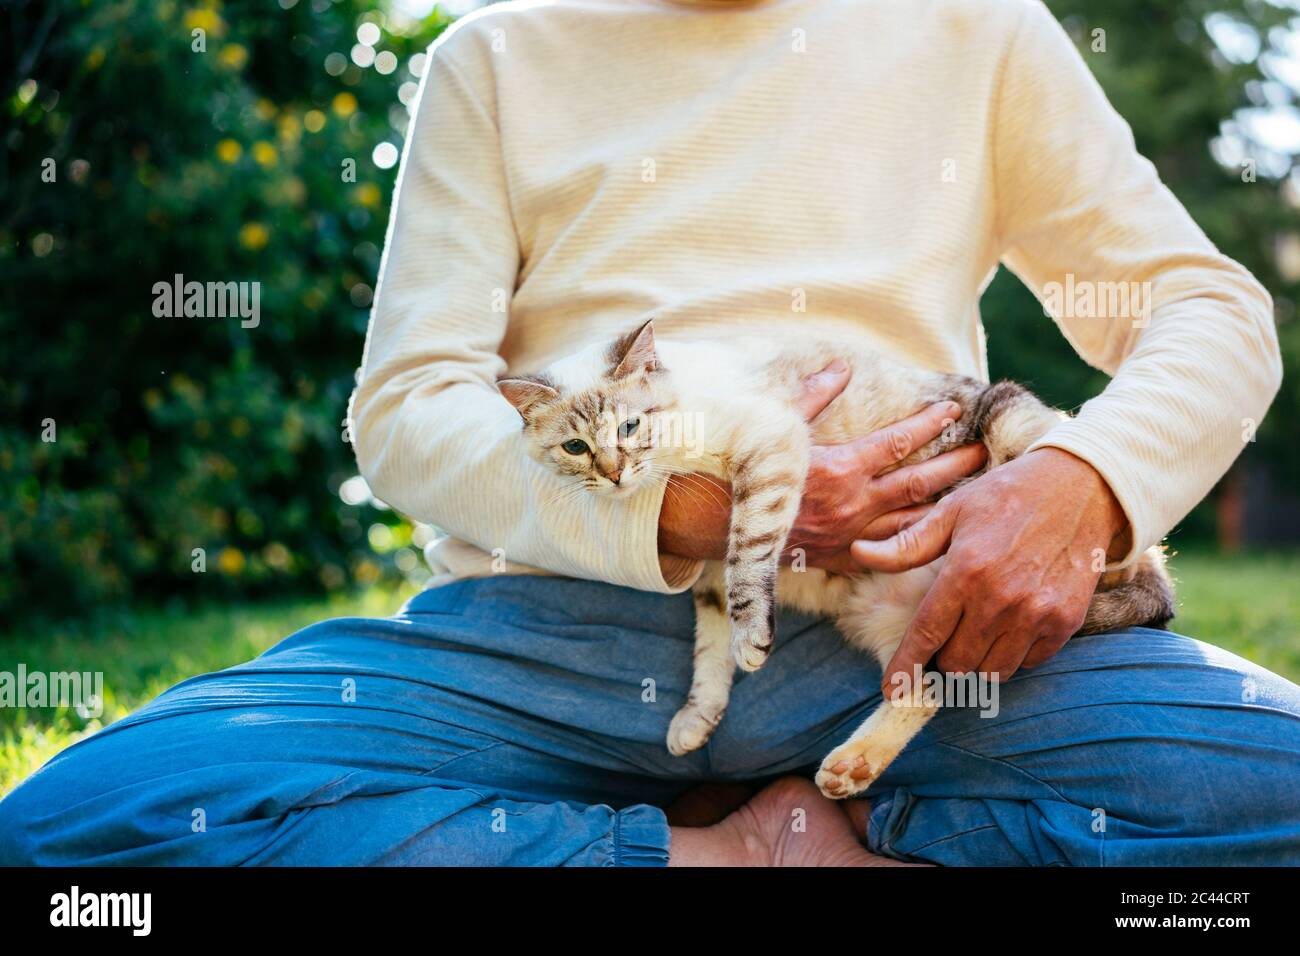 Senior man cuddling with his cat in garden Stock Photo